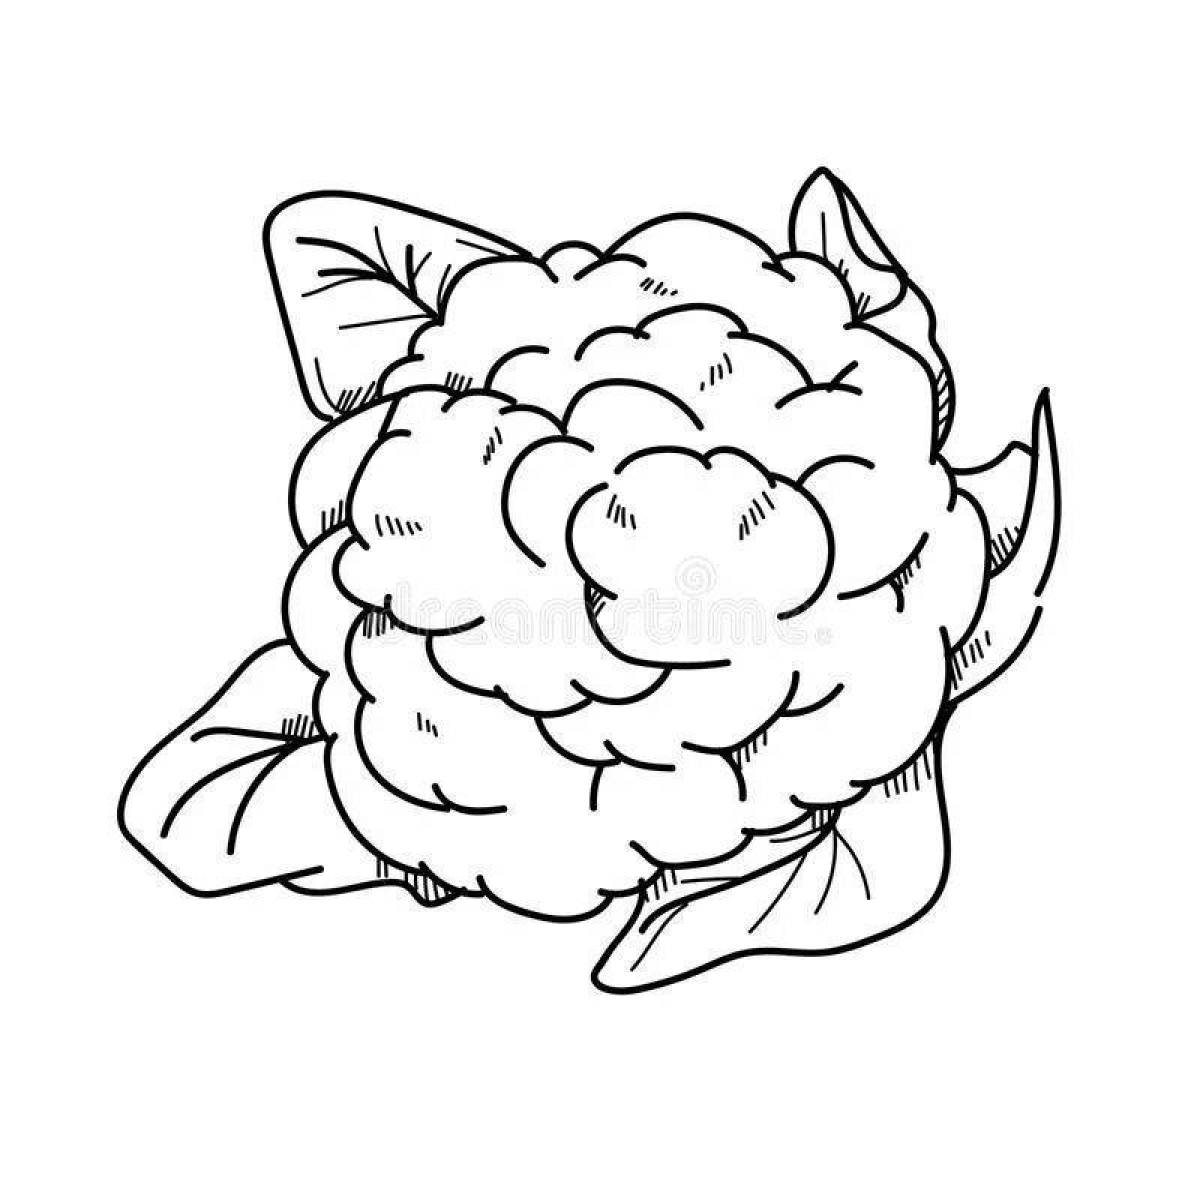 Fun coloring of cauliflower